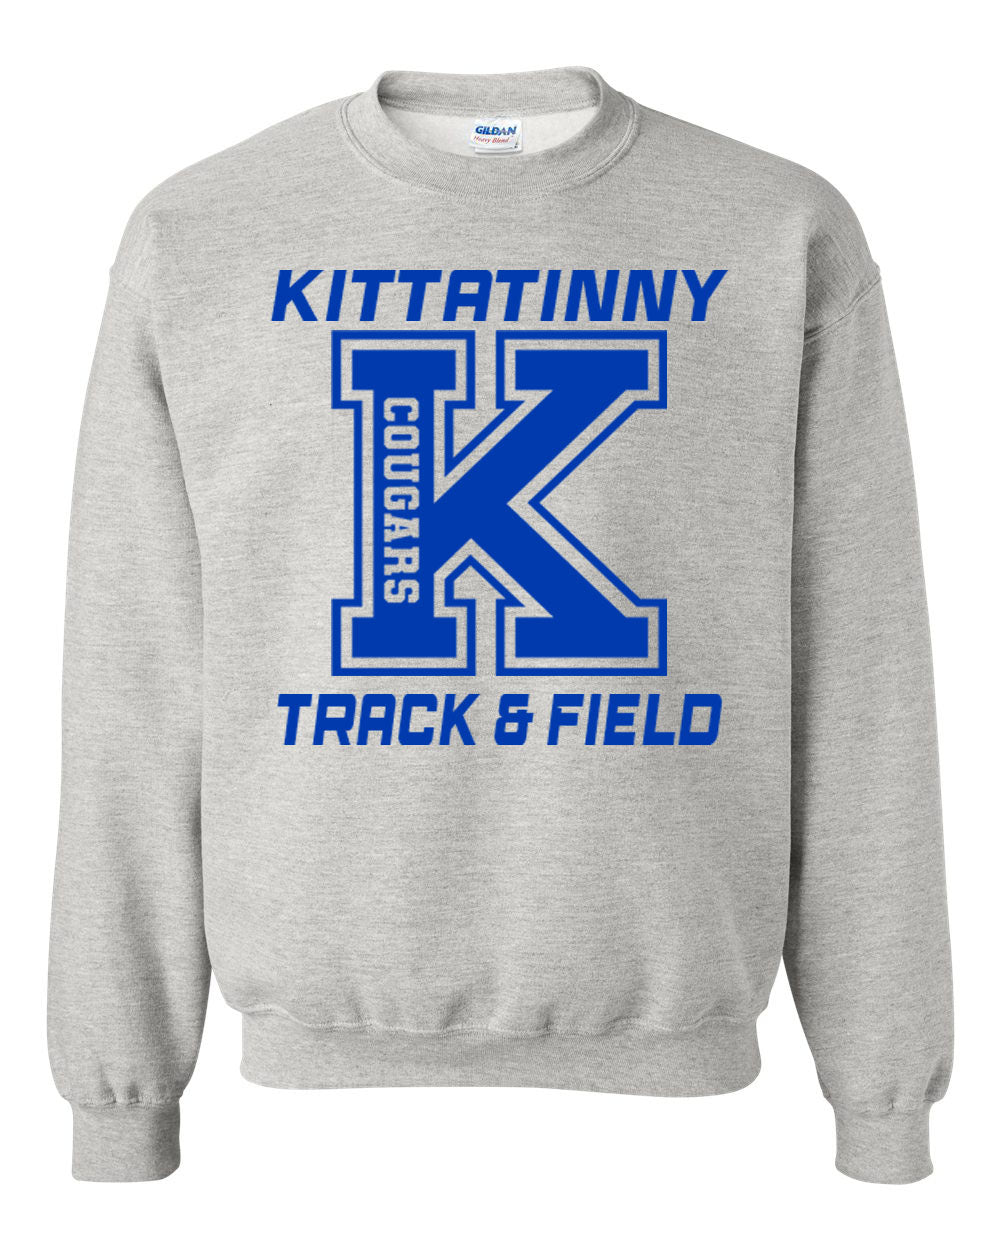 Kittatinny Track Design 3 non hooded sweatshirt